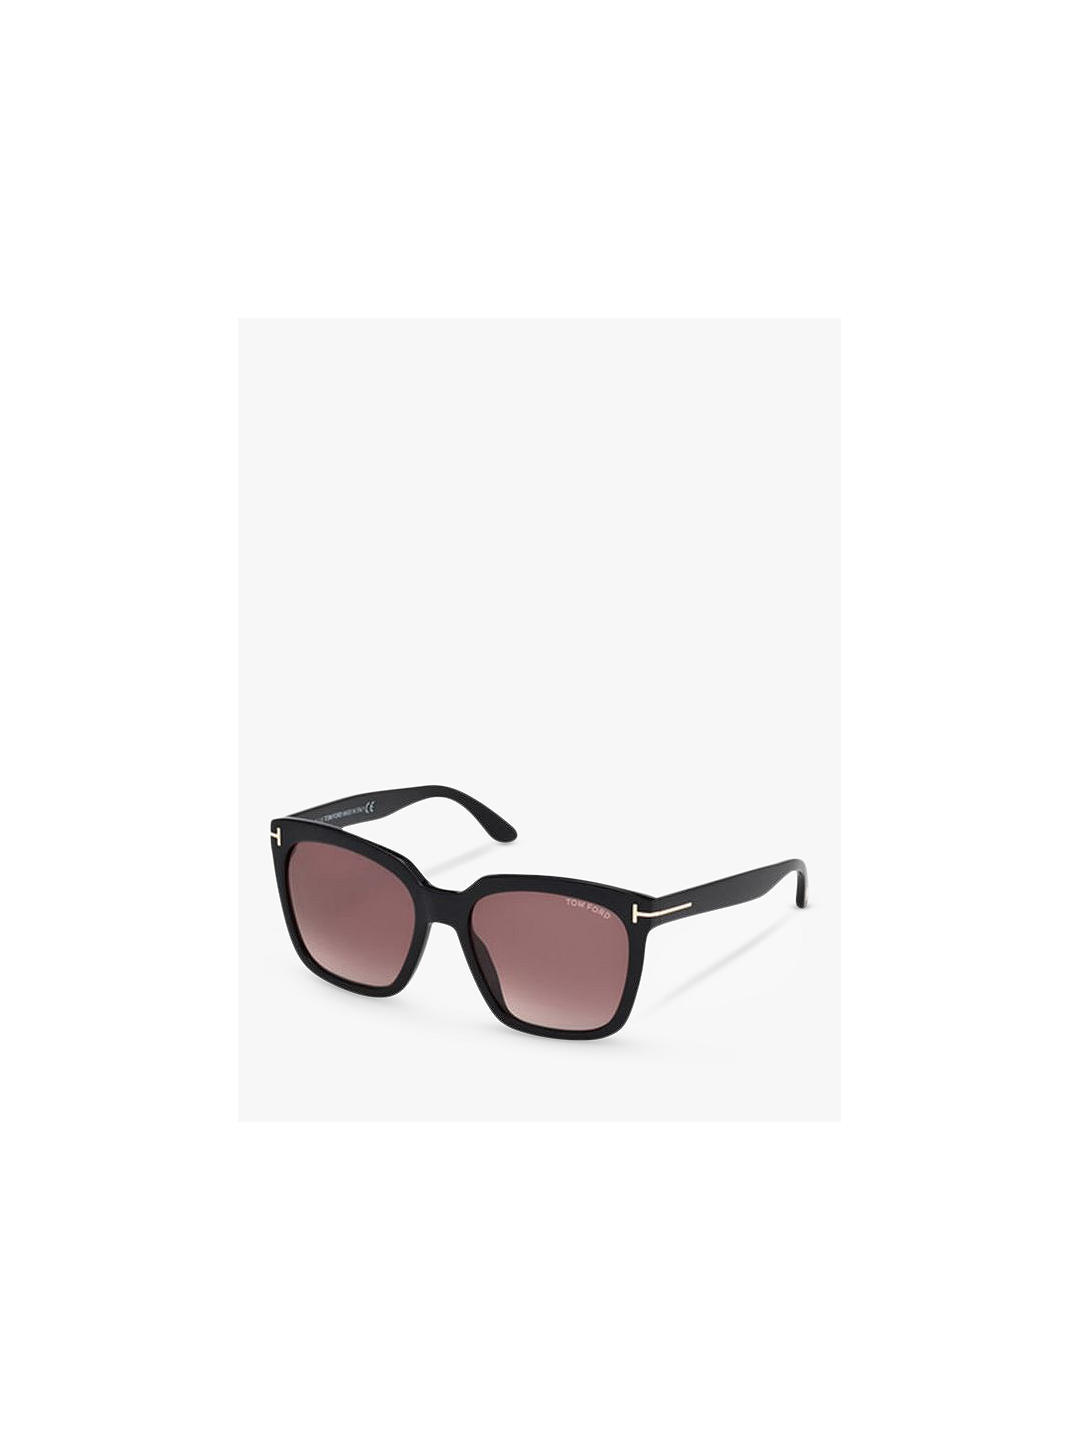 TOM FORD FT0502 Square Sunglasses, Black/Pink Gradient